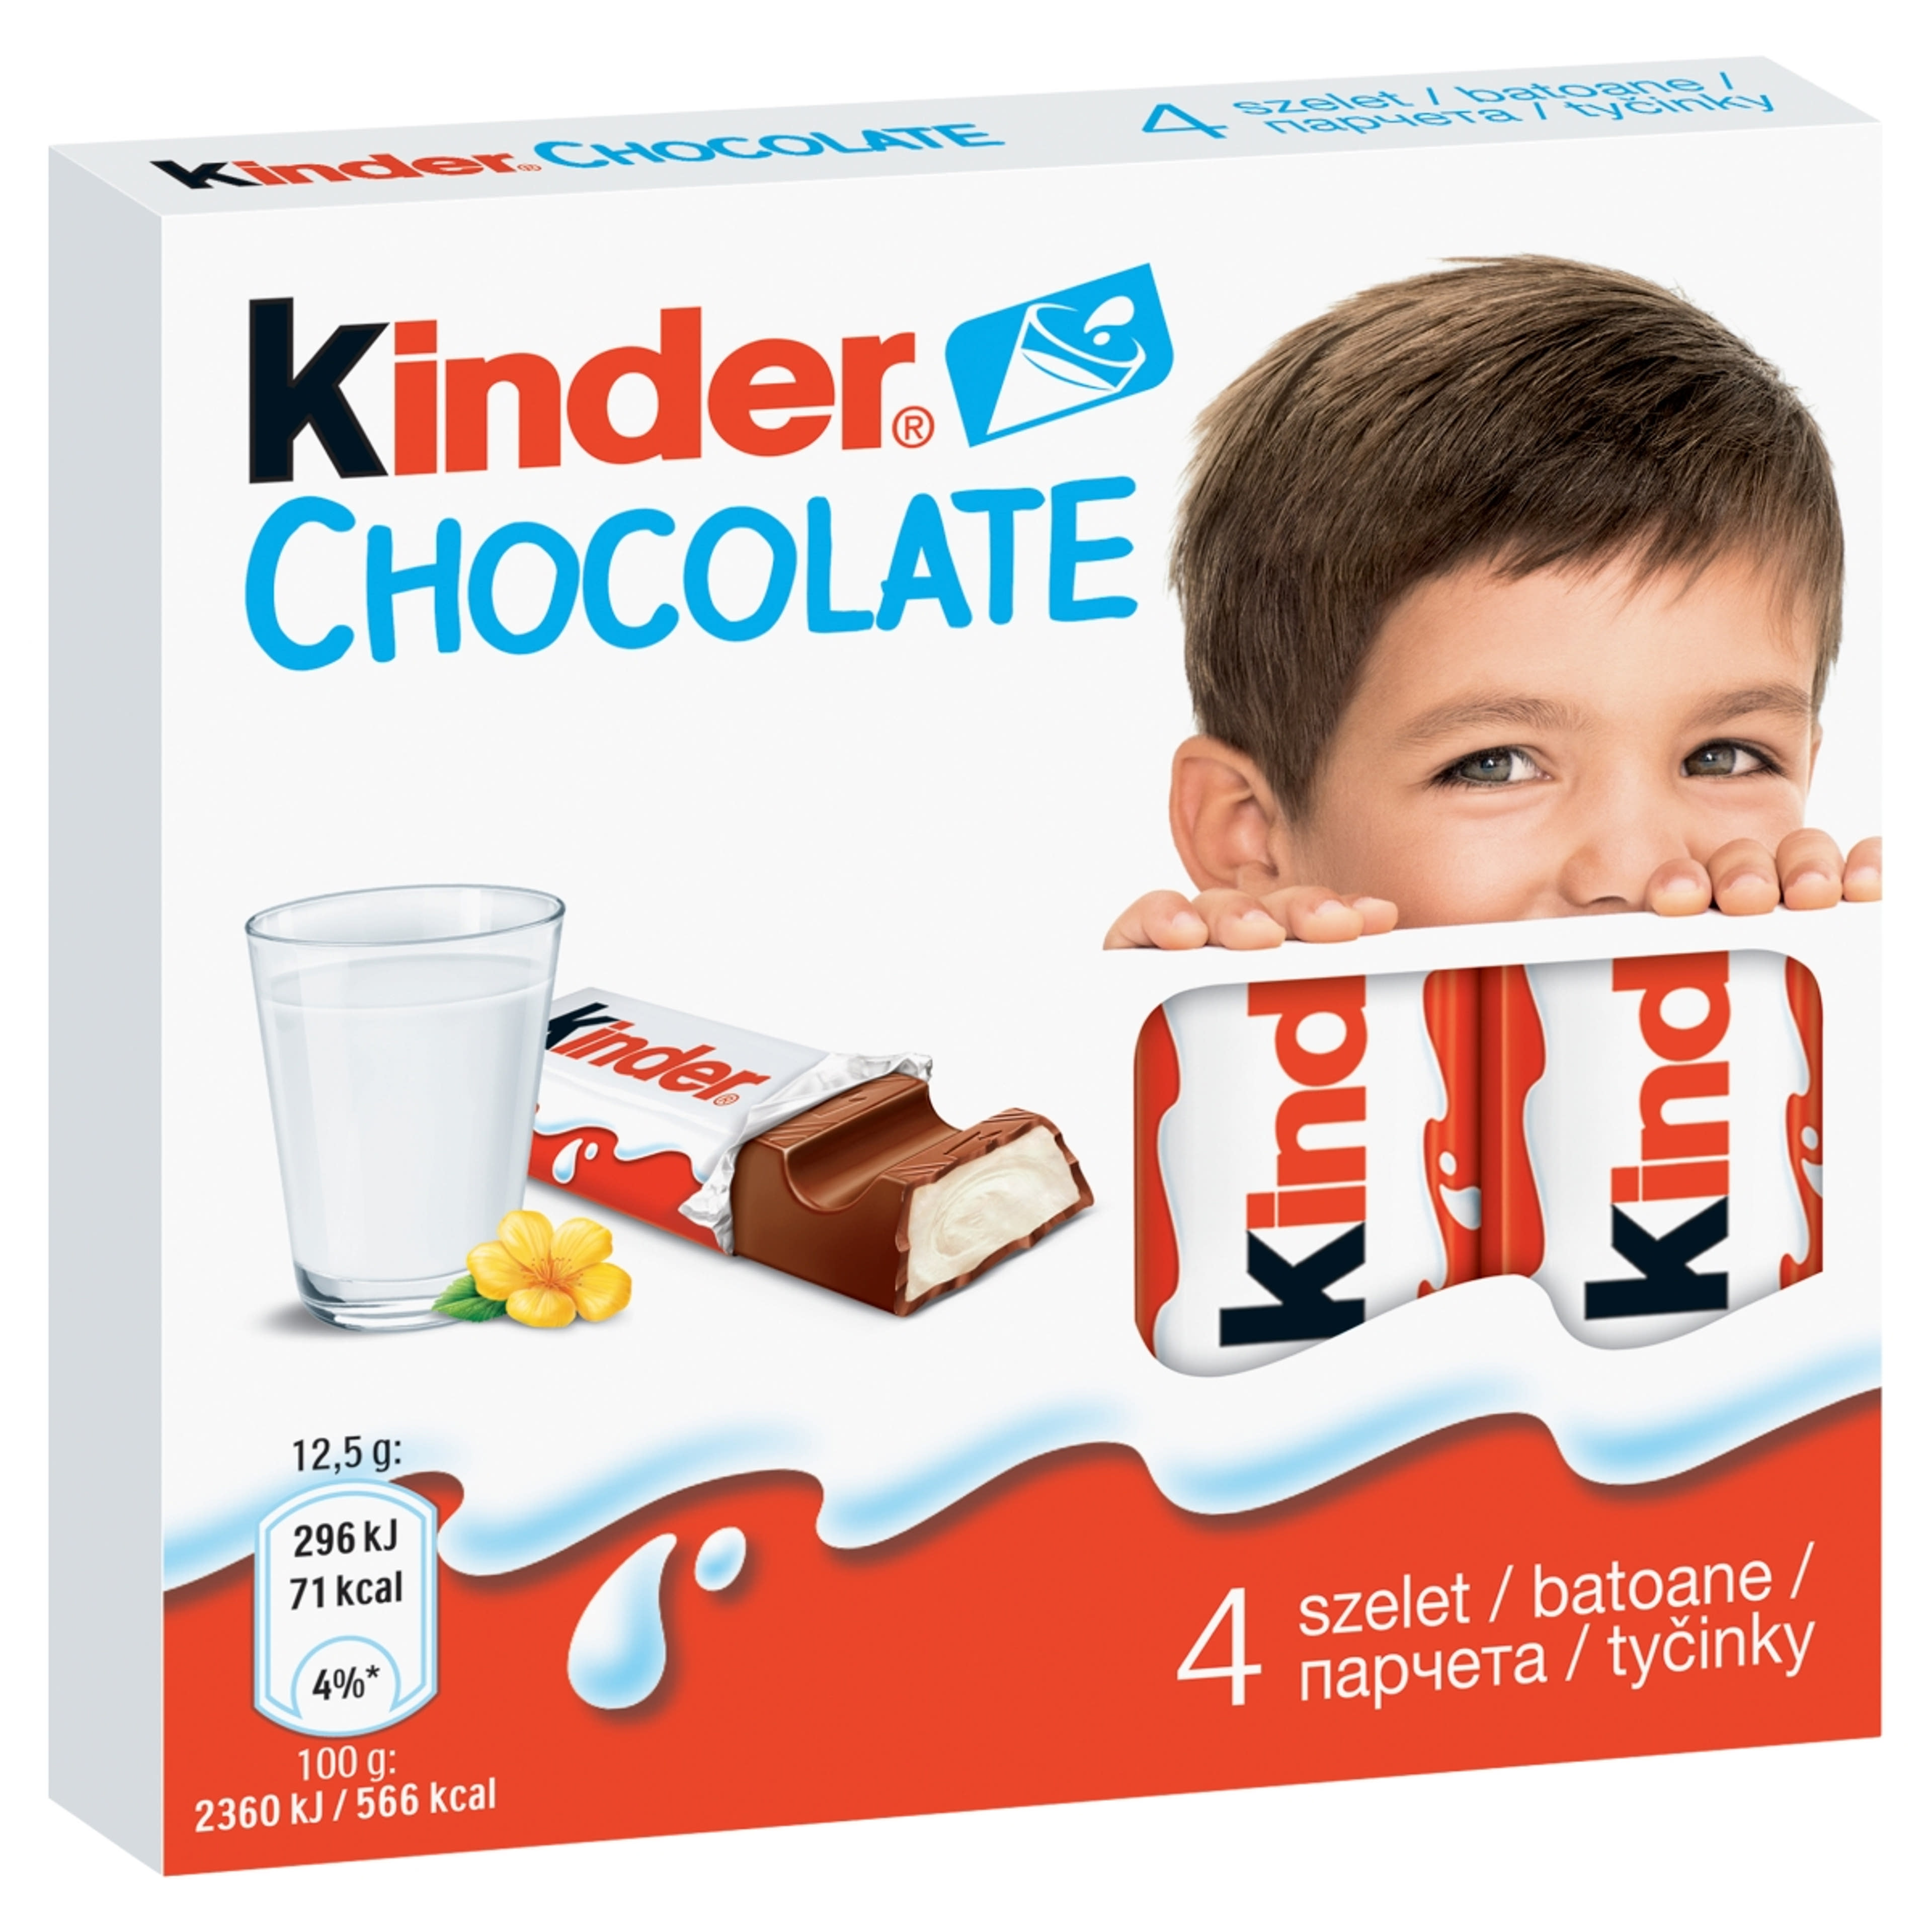 Kinder chocolate - 50 g